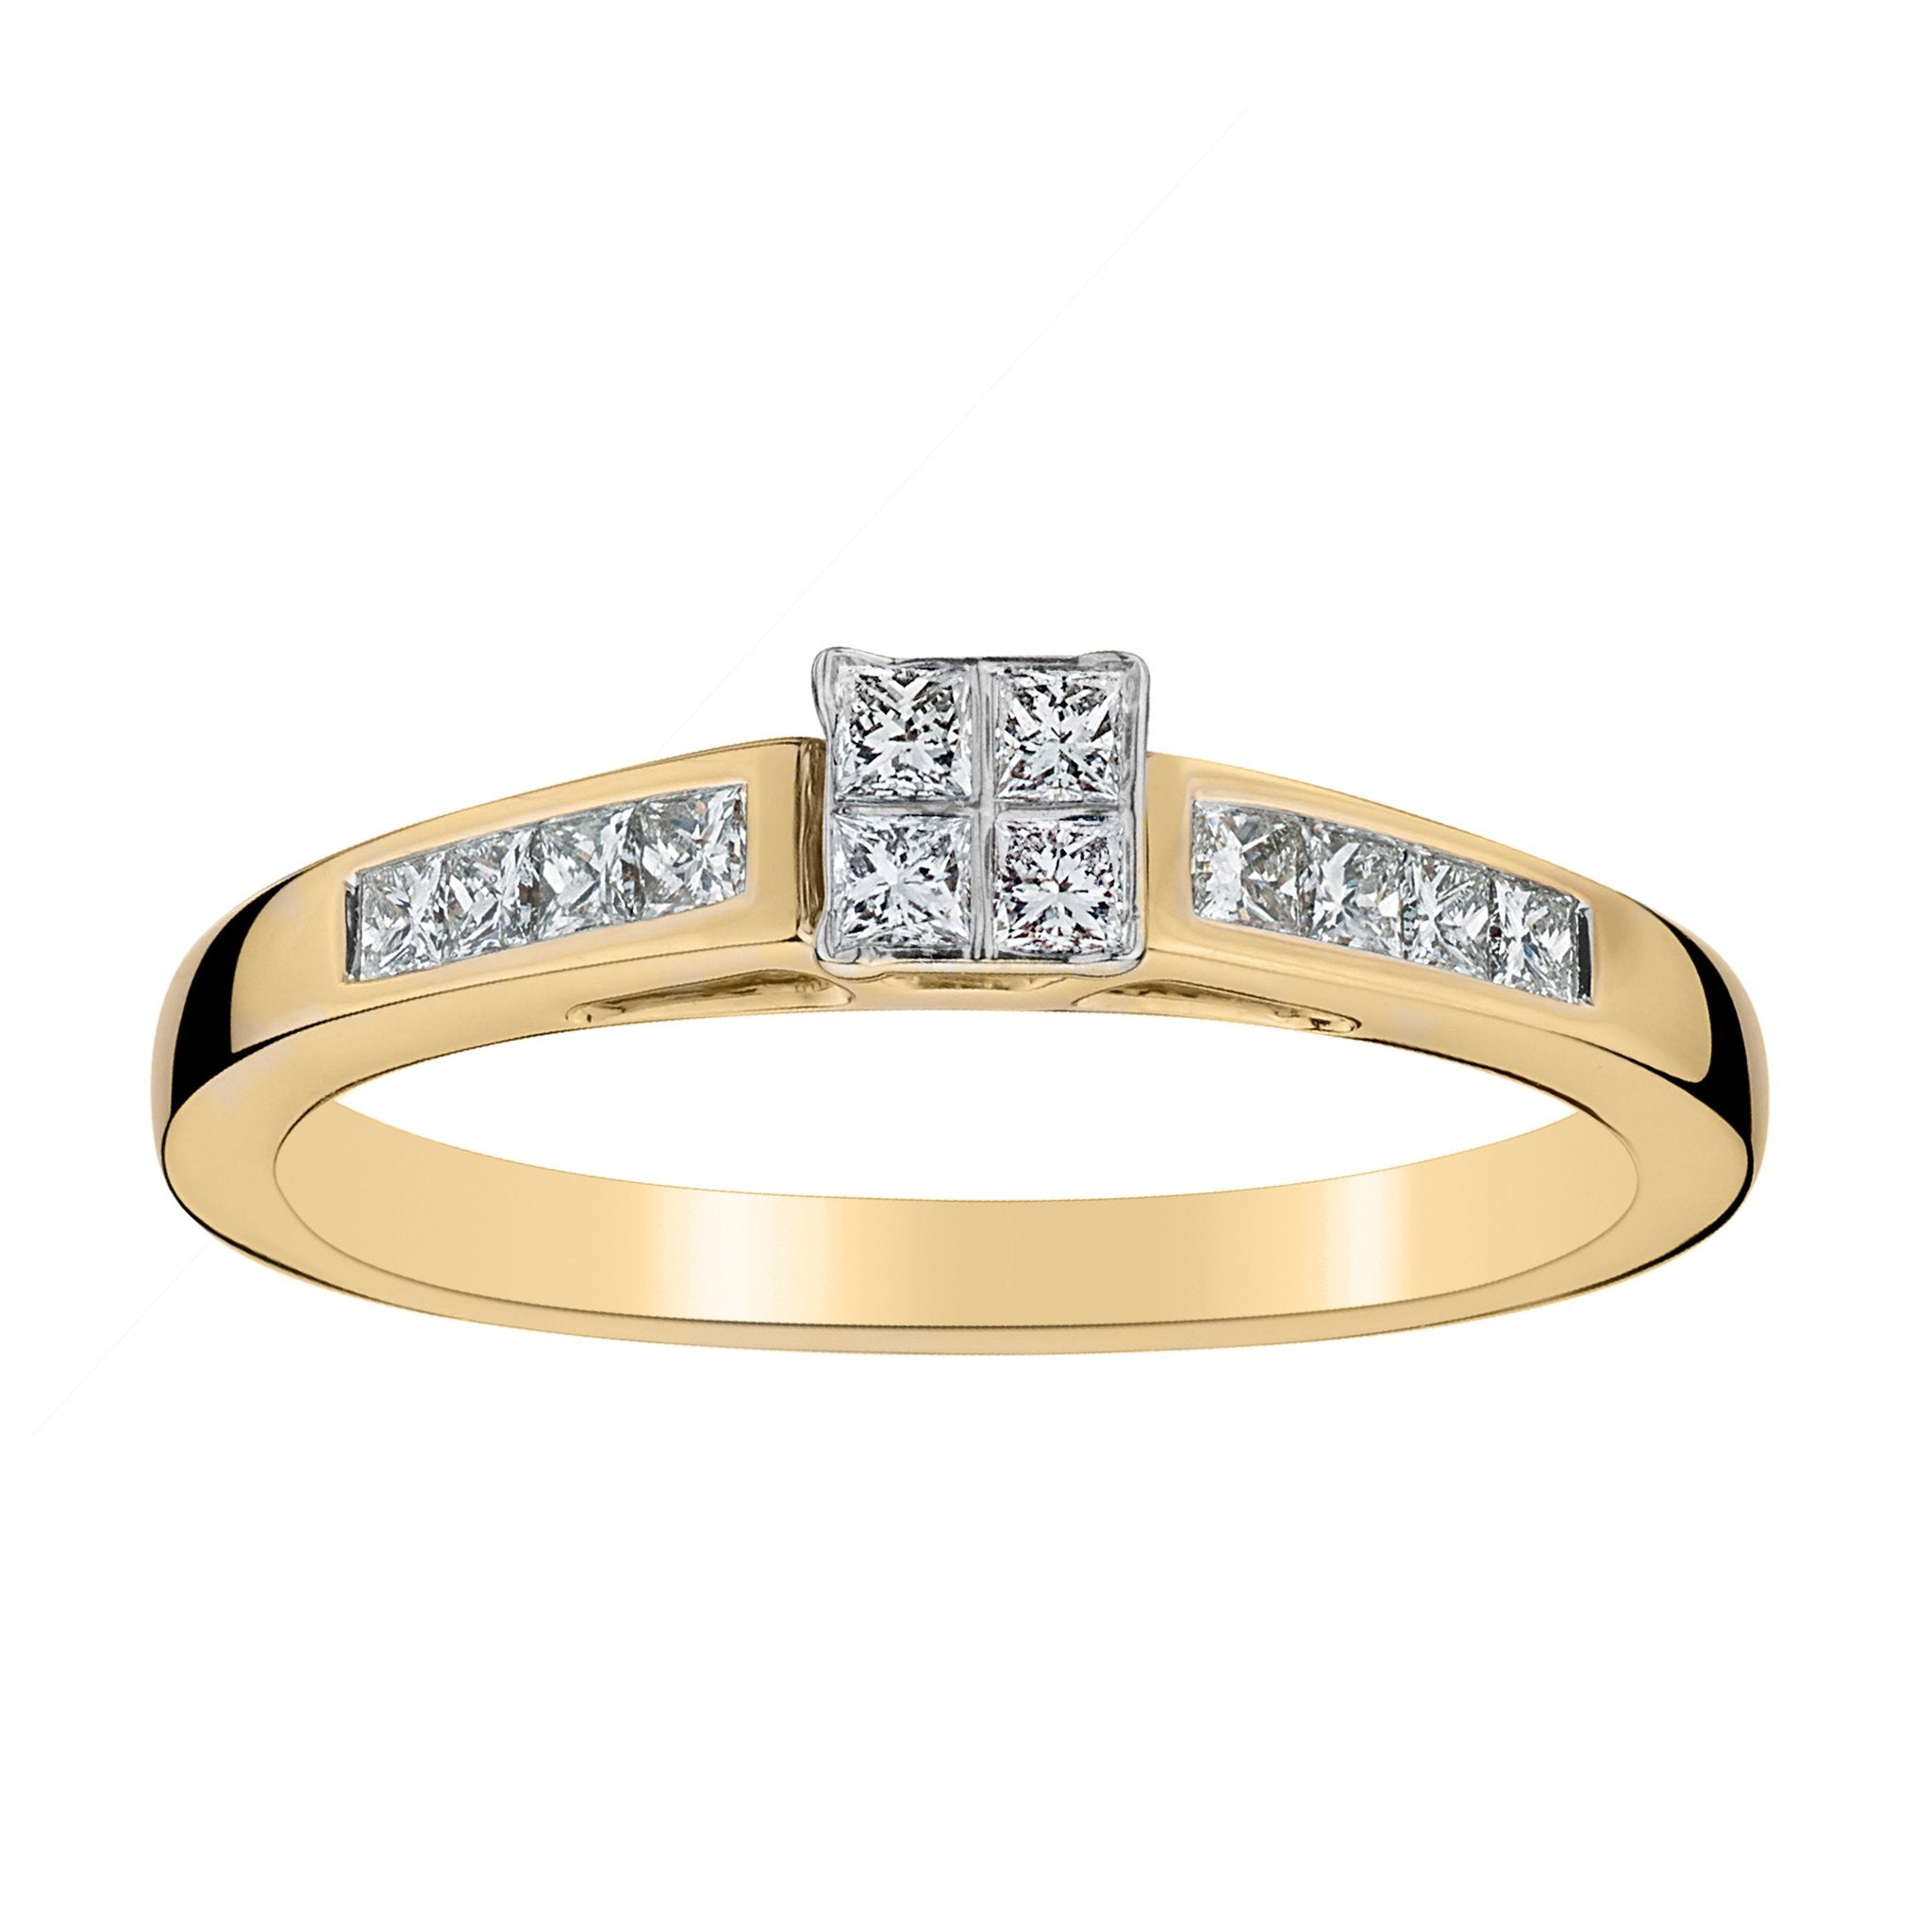 .30 CARAT DIAMOND PRINCESS DESIGN RING, 10kt YELLOW GOLD - Griffin Jewellery Designs